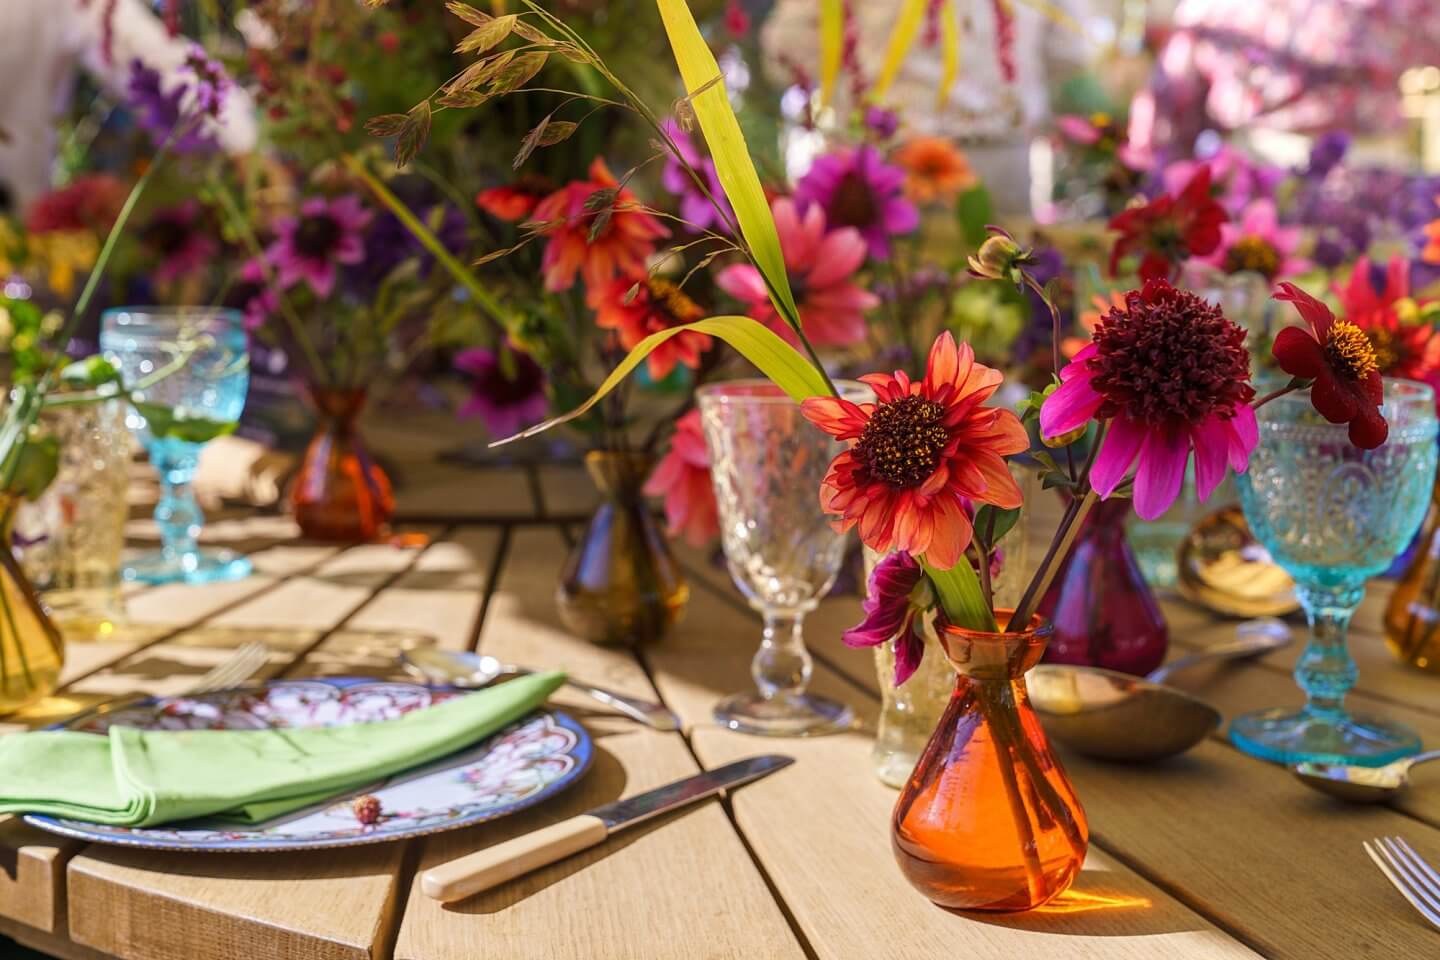 floral displays by Arthur Parkinson using Sarah Raven blooms and Lamb & Newt glassware